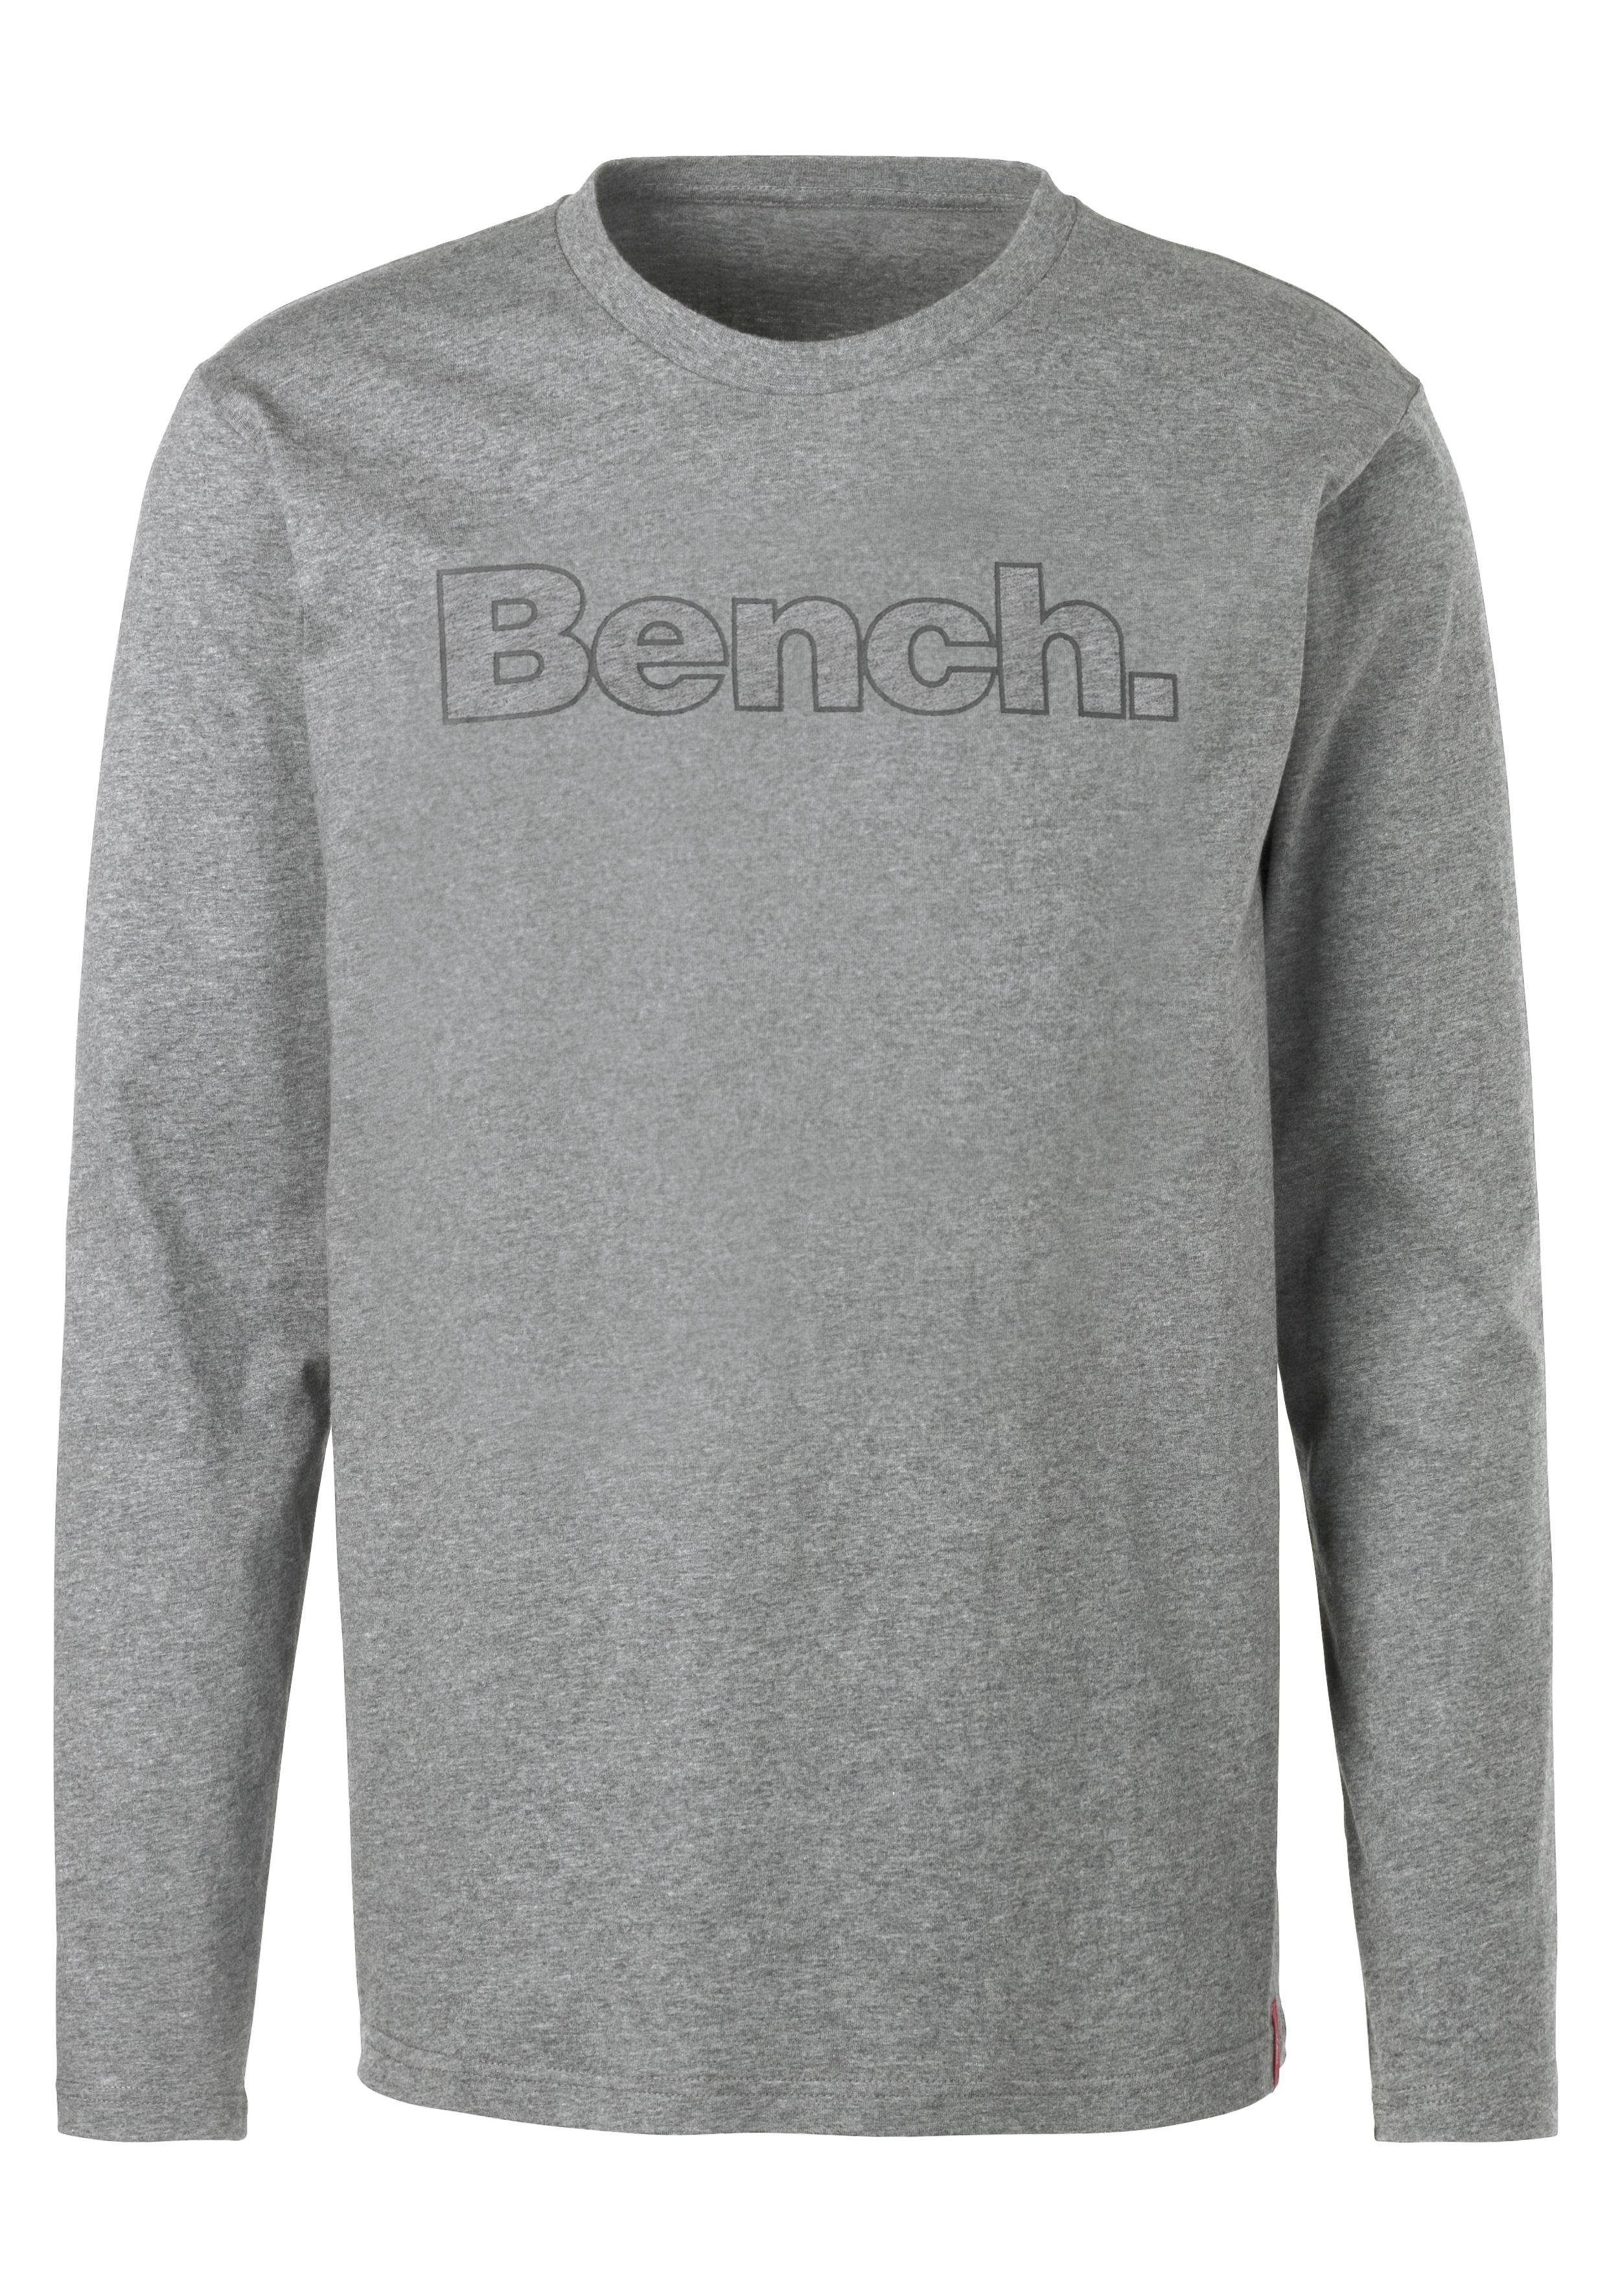 Bench. Loungewear grau-meliert navy, (2-tlg) Bench. Langarmshirt Print mit vorn